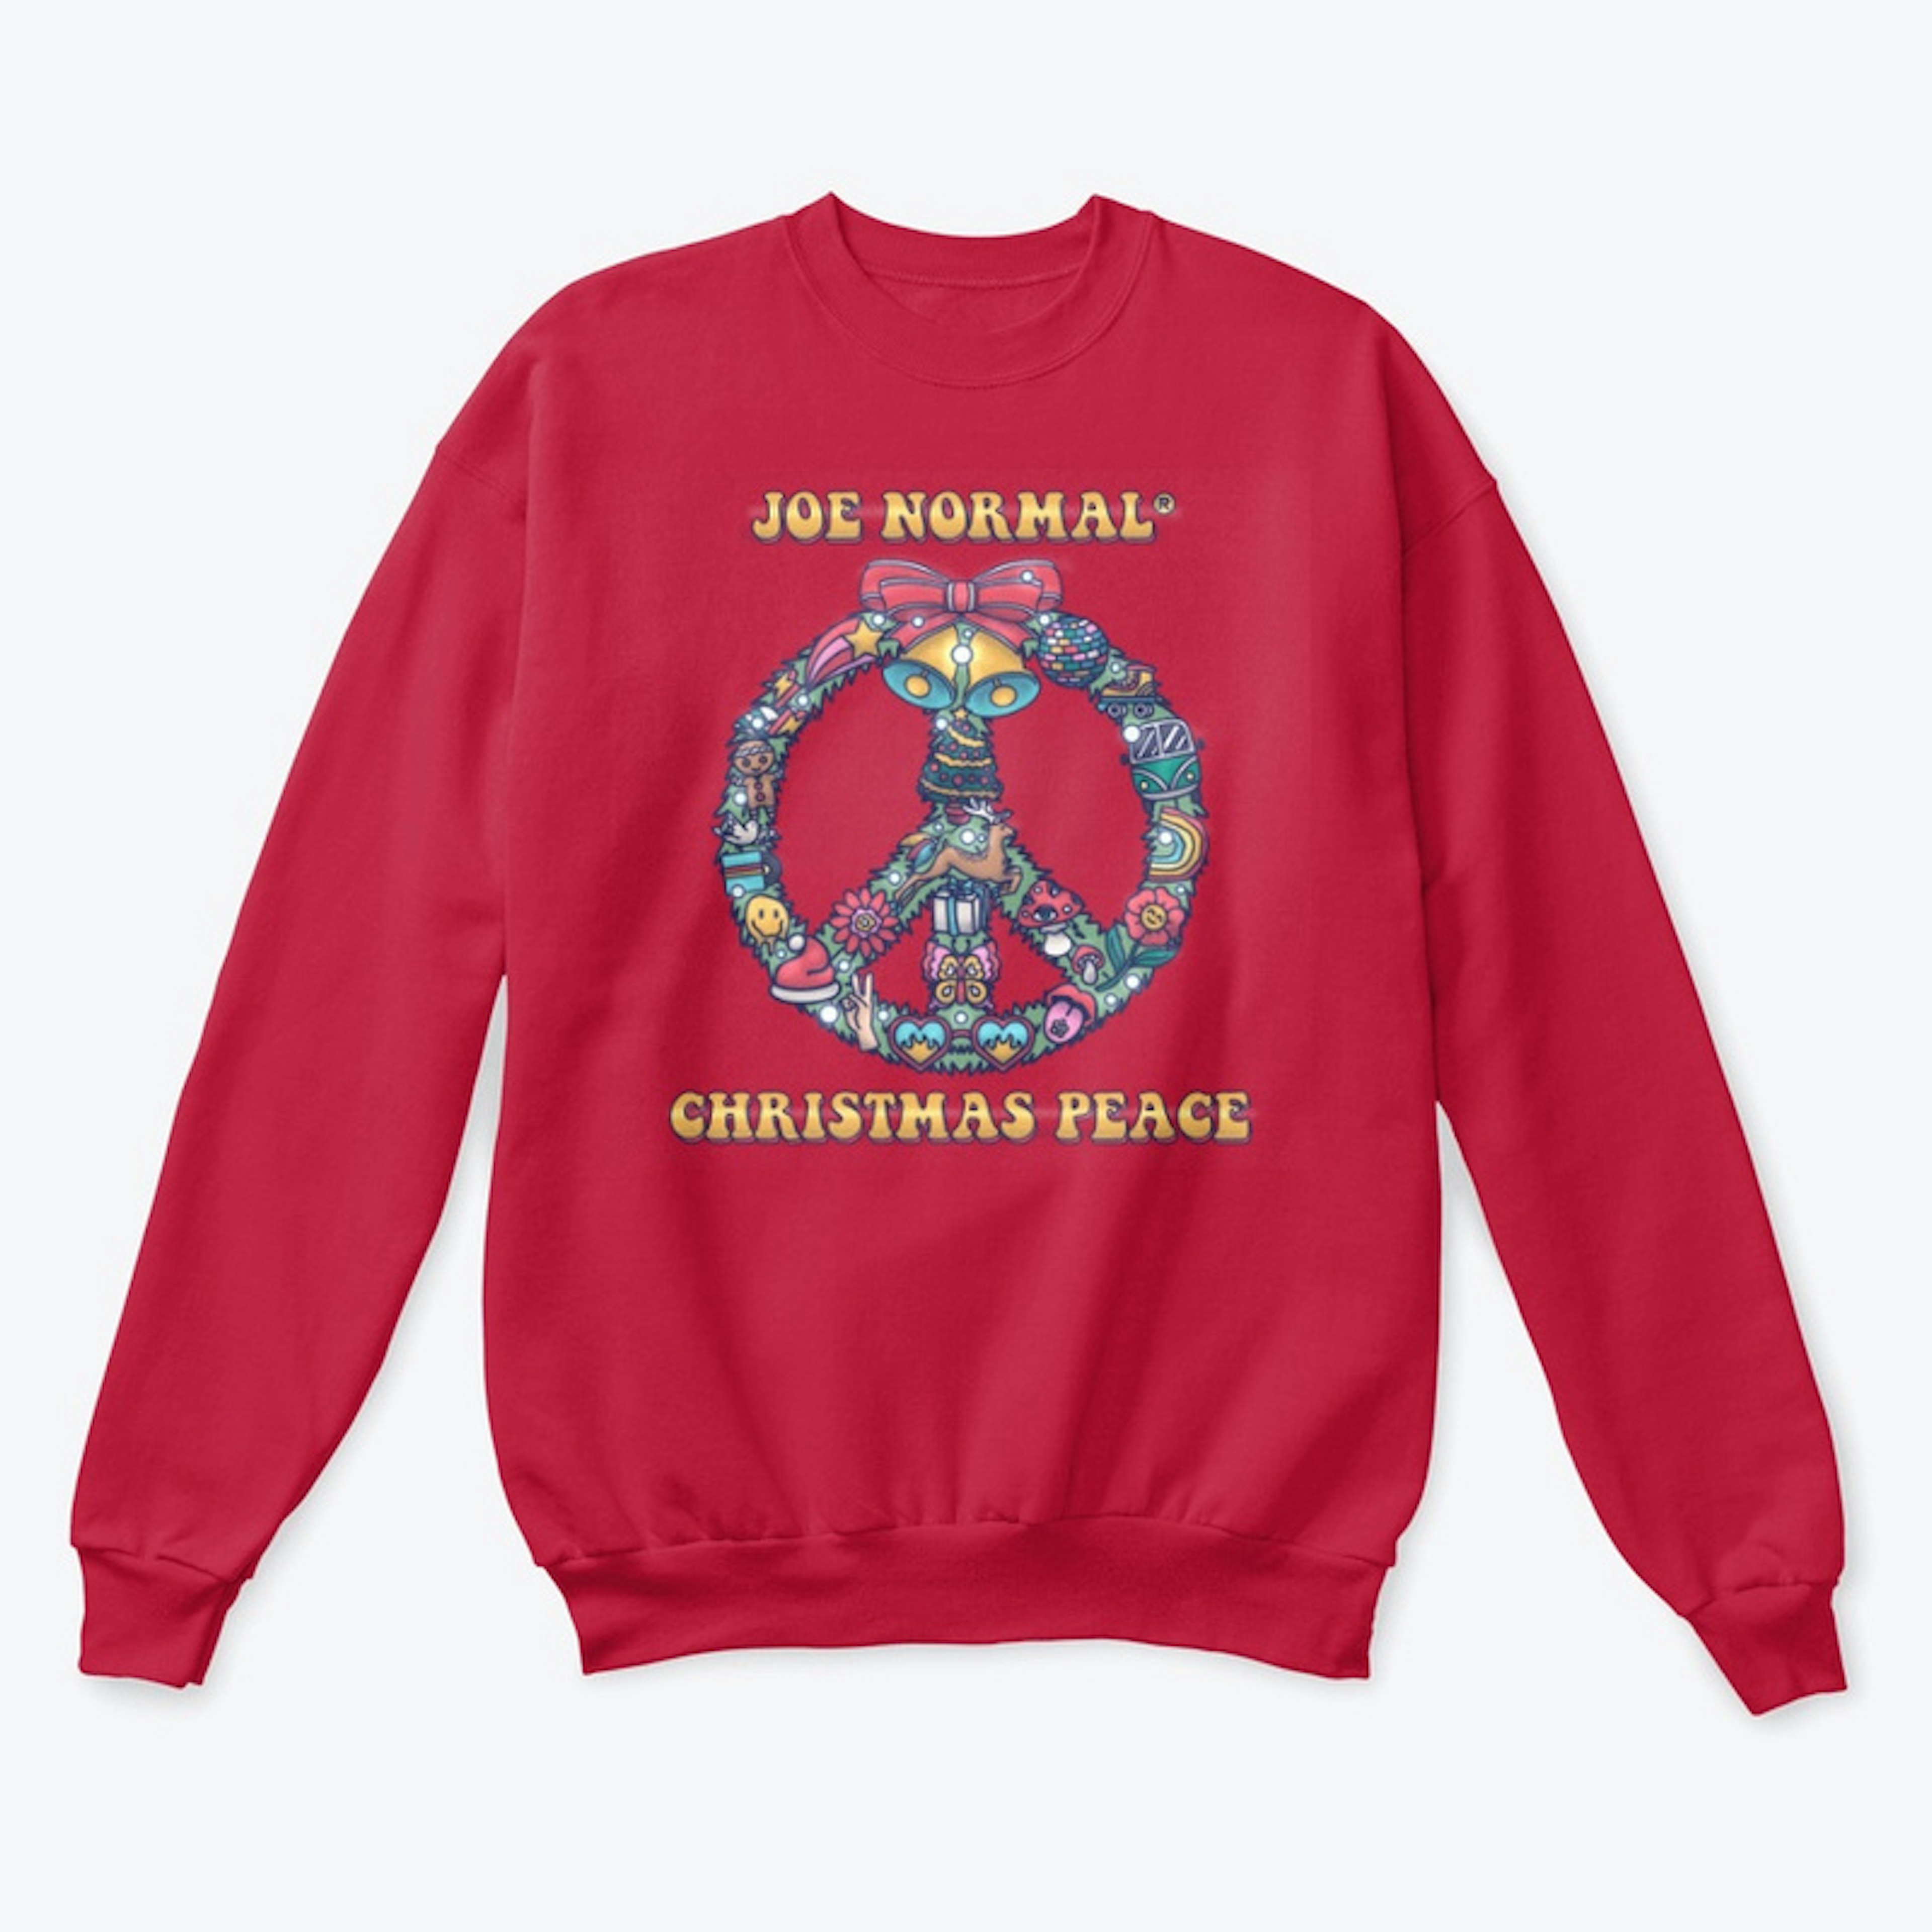 "Christmas Peace" by Joe Normal